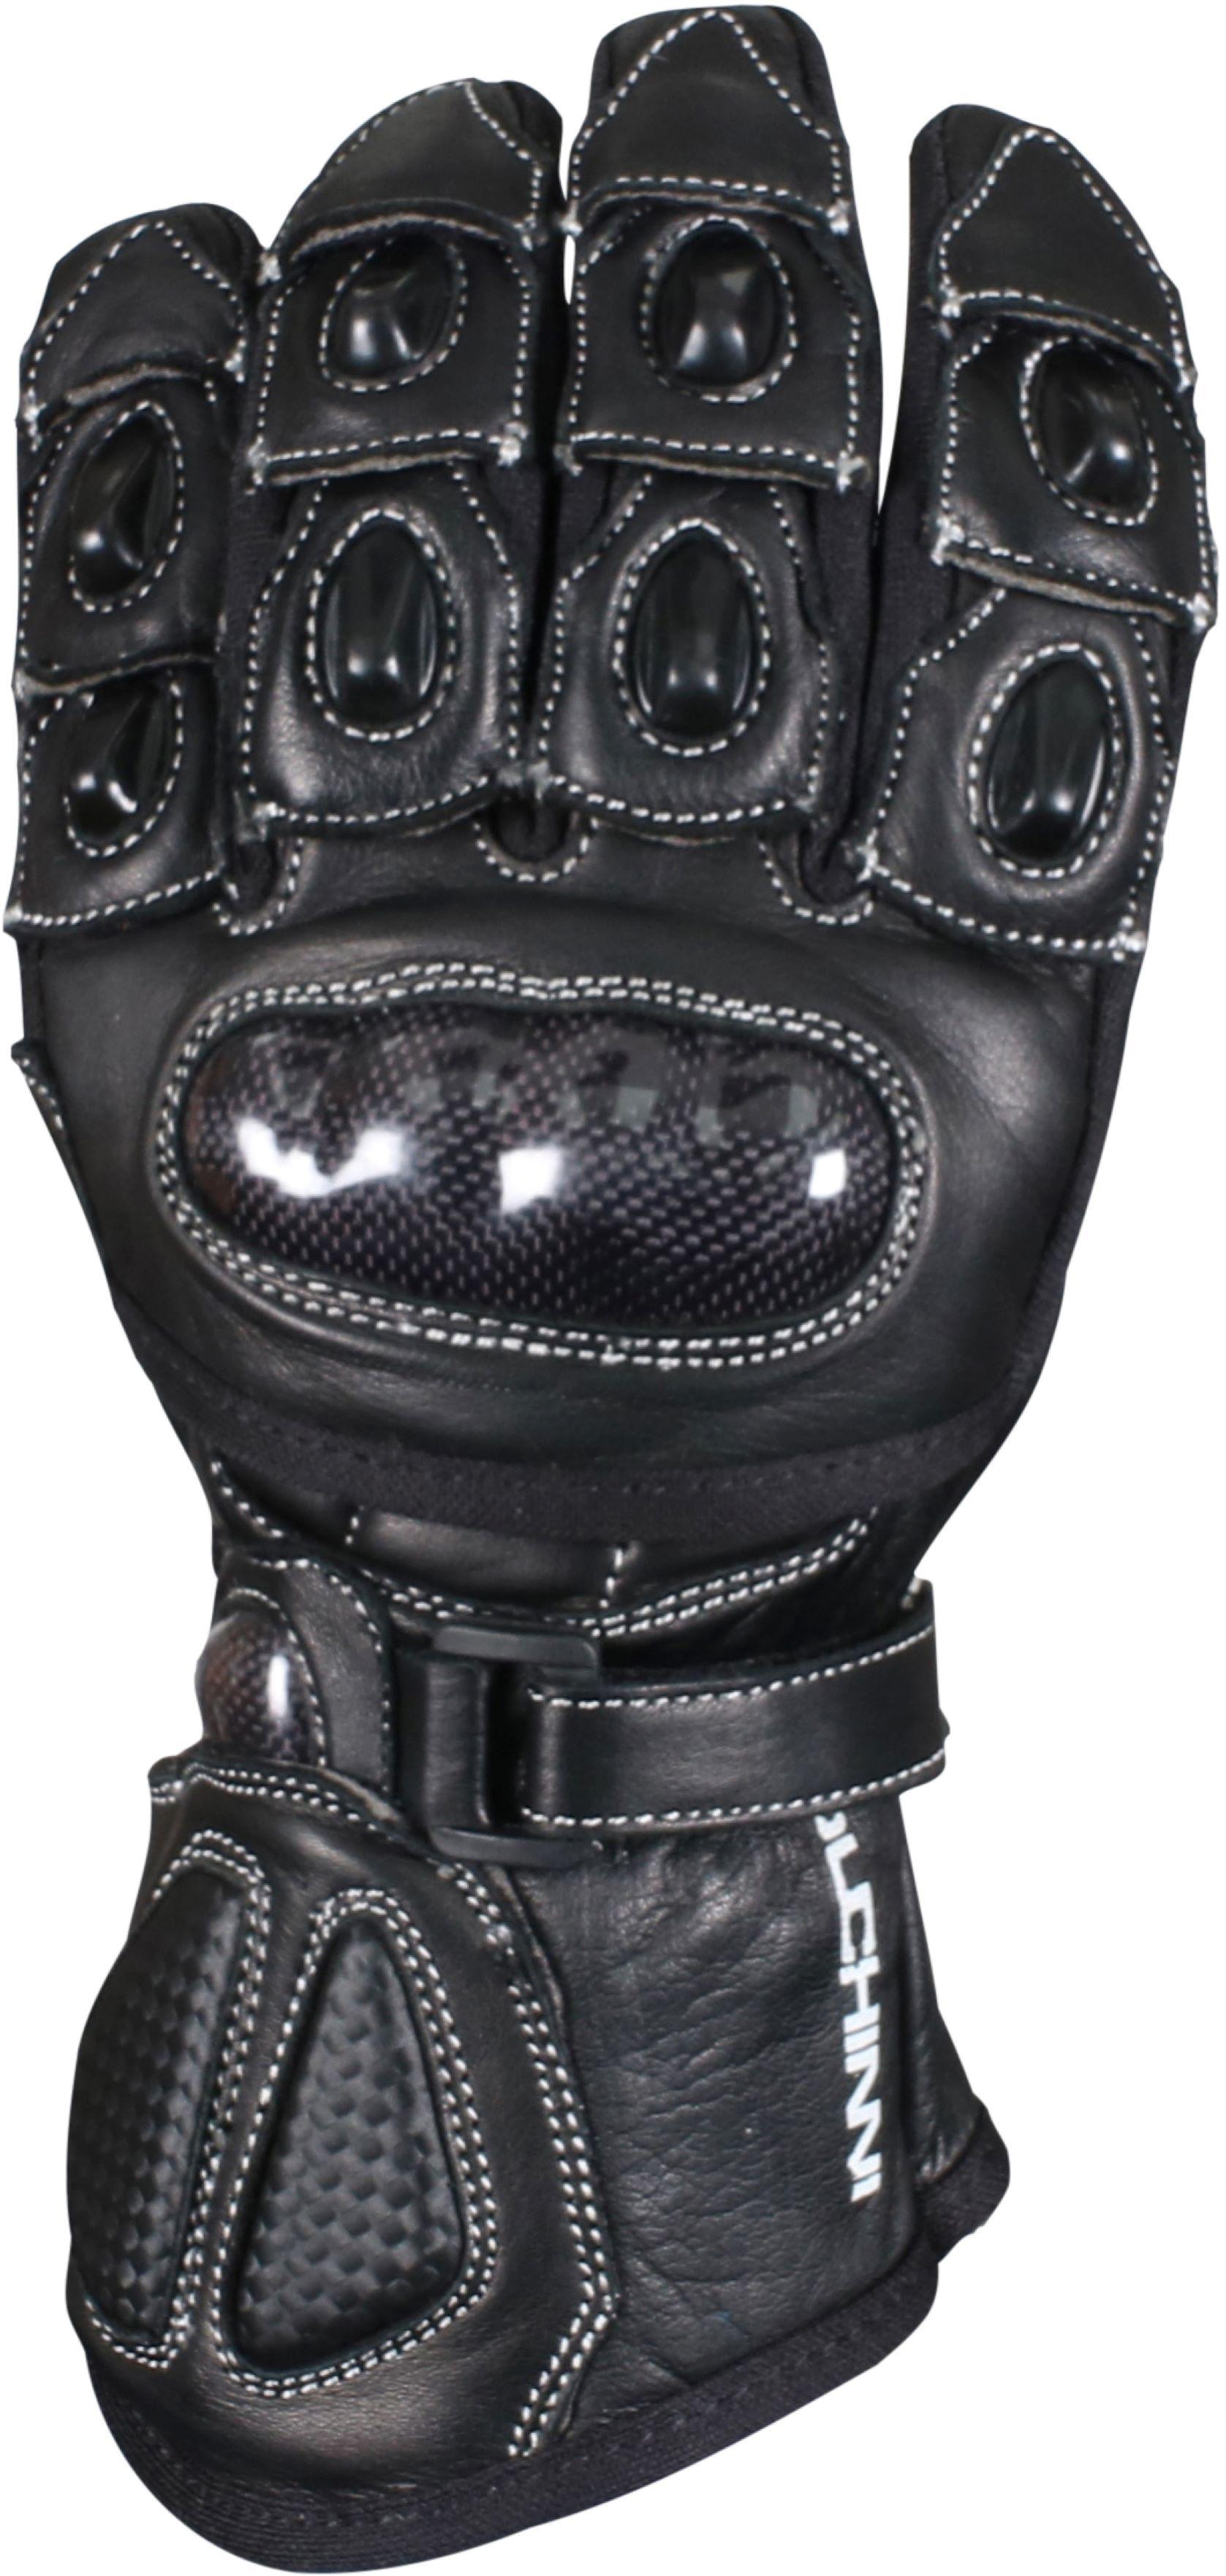 Duchinni Bambino Youth Motorcycle Gloves - Black, M